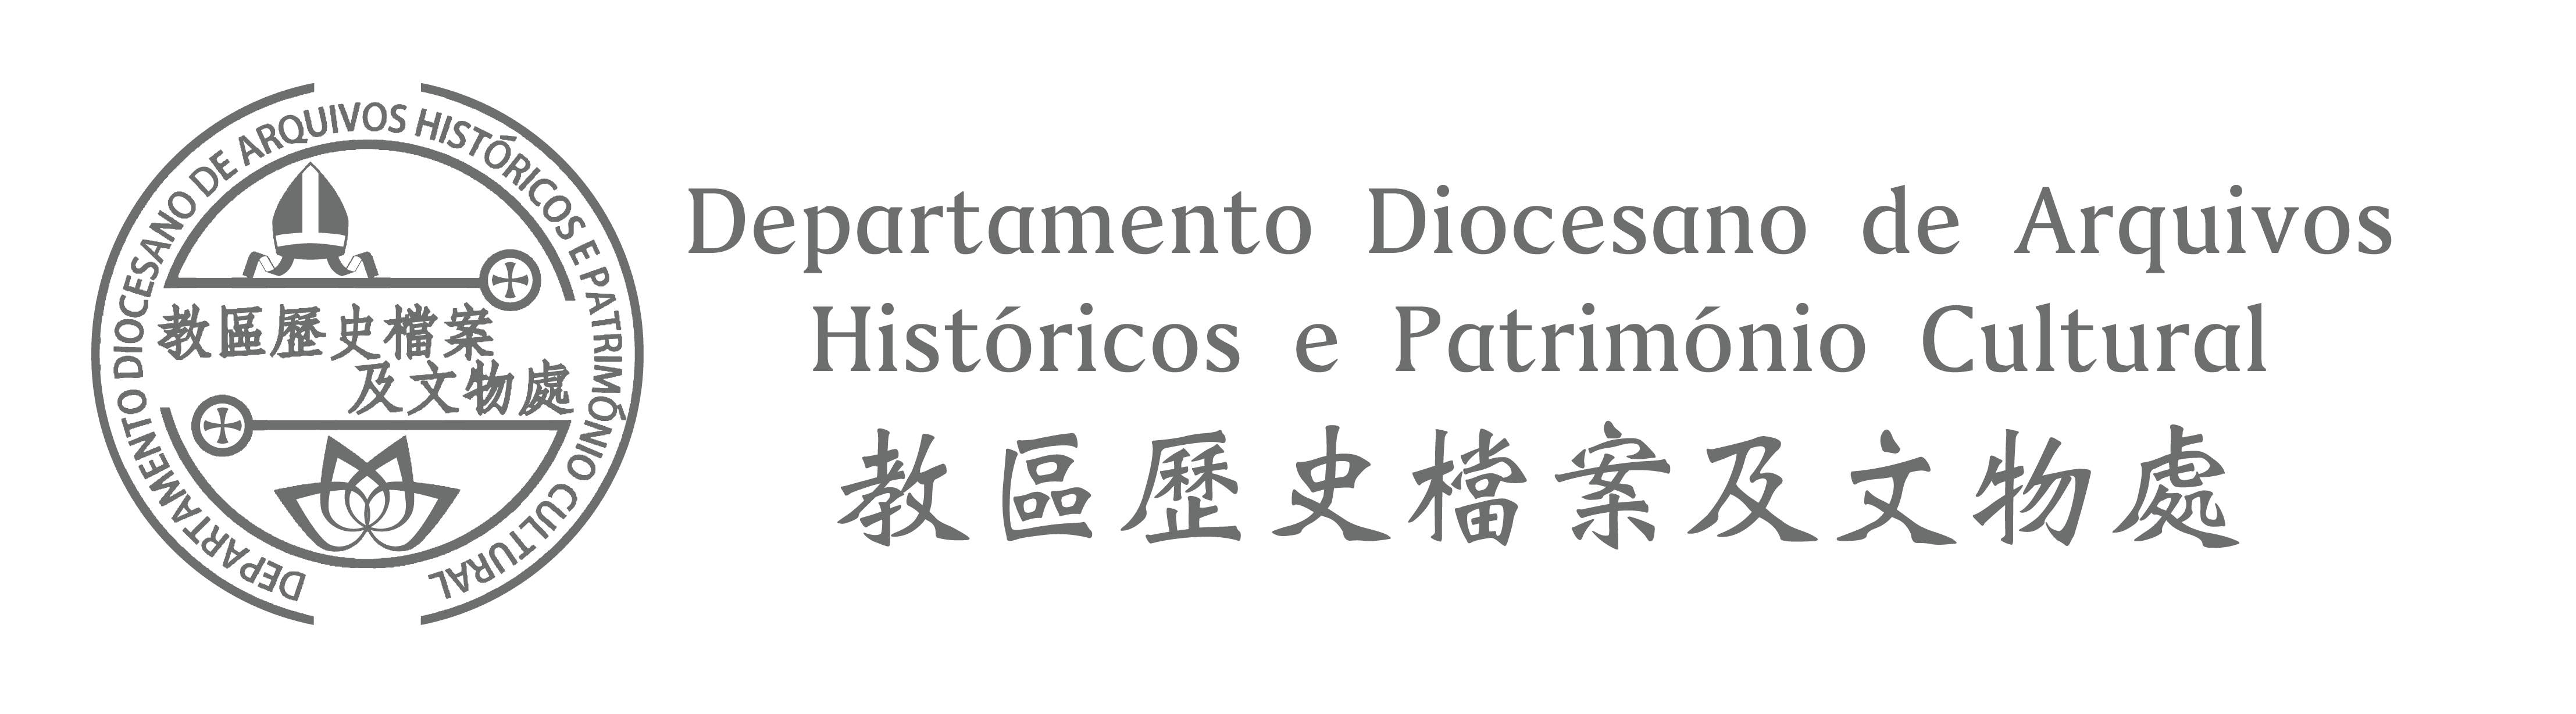 Departamento Diocesano de Arquivos Históricos e Património Cultural 